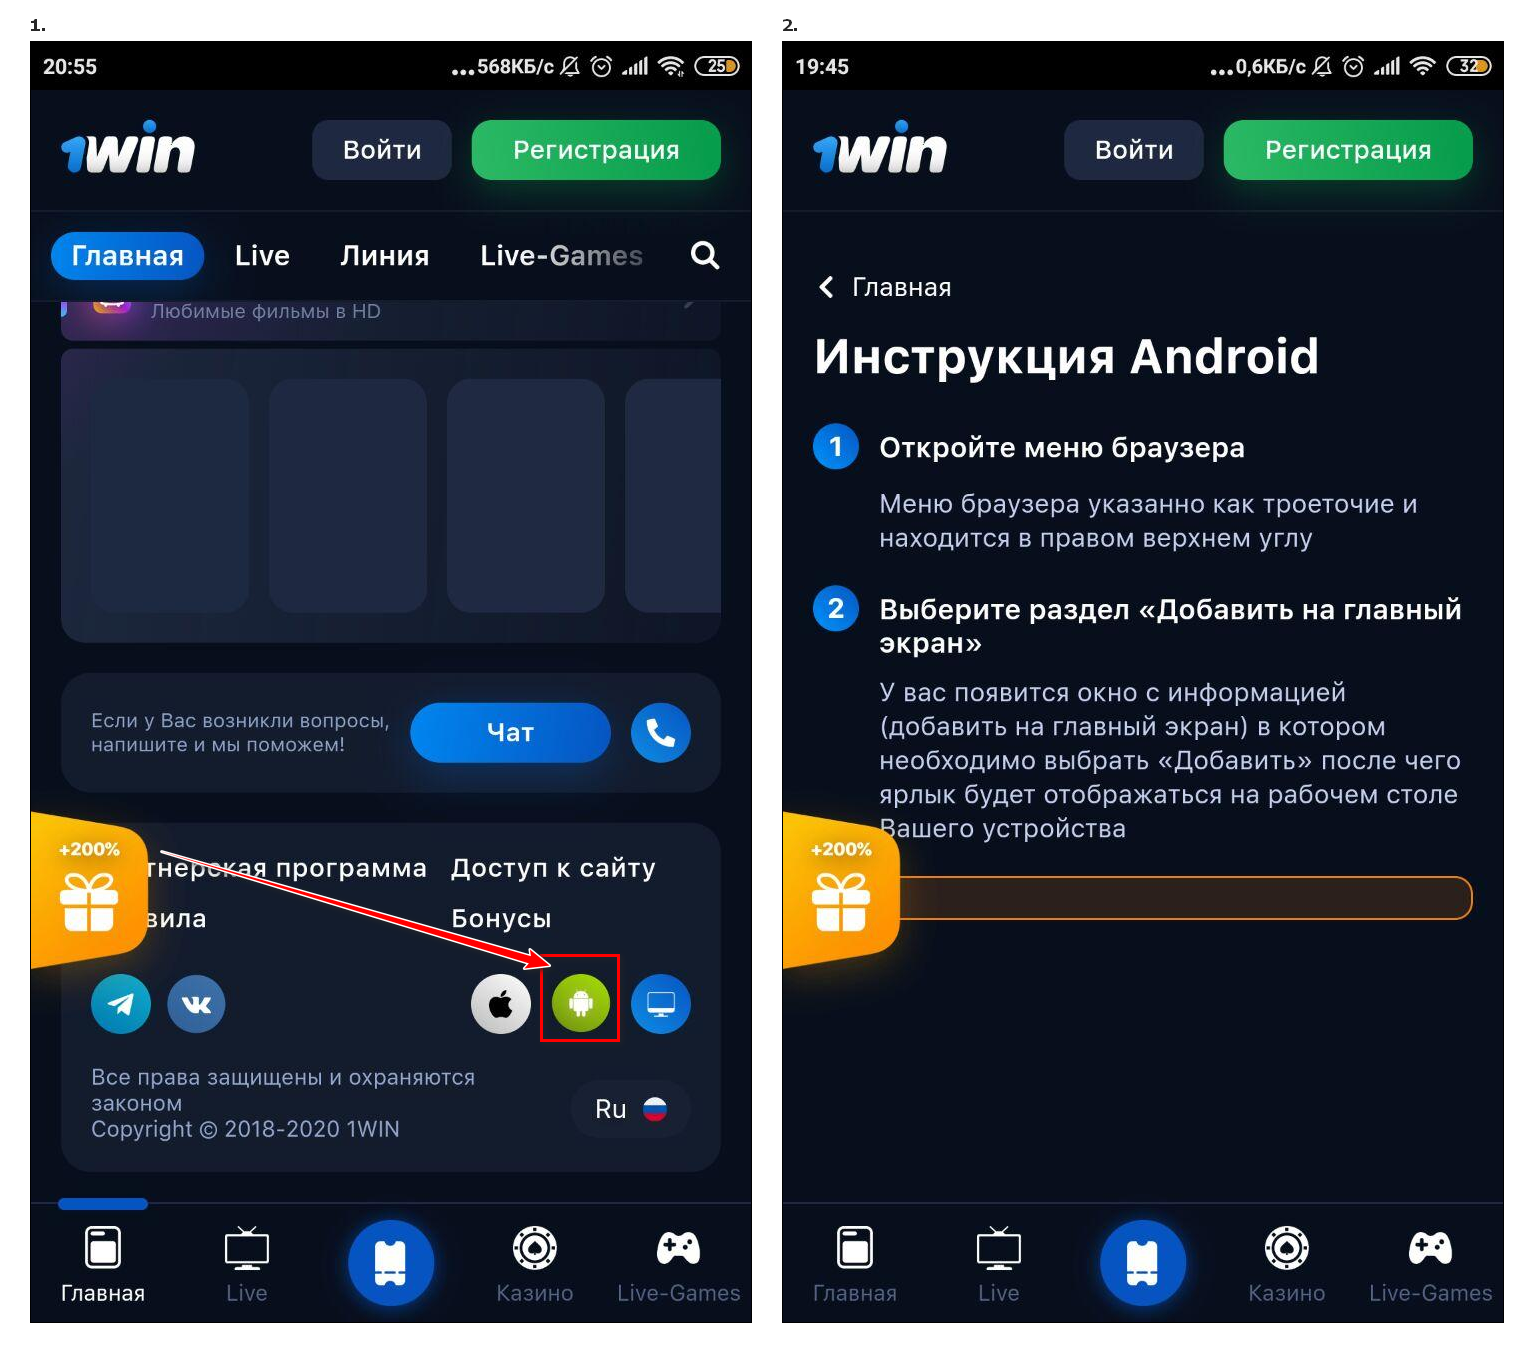 1вин мобильная версия 1win wse5. 1вин приложение. Андроид 1.